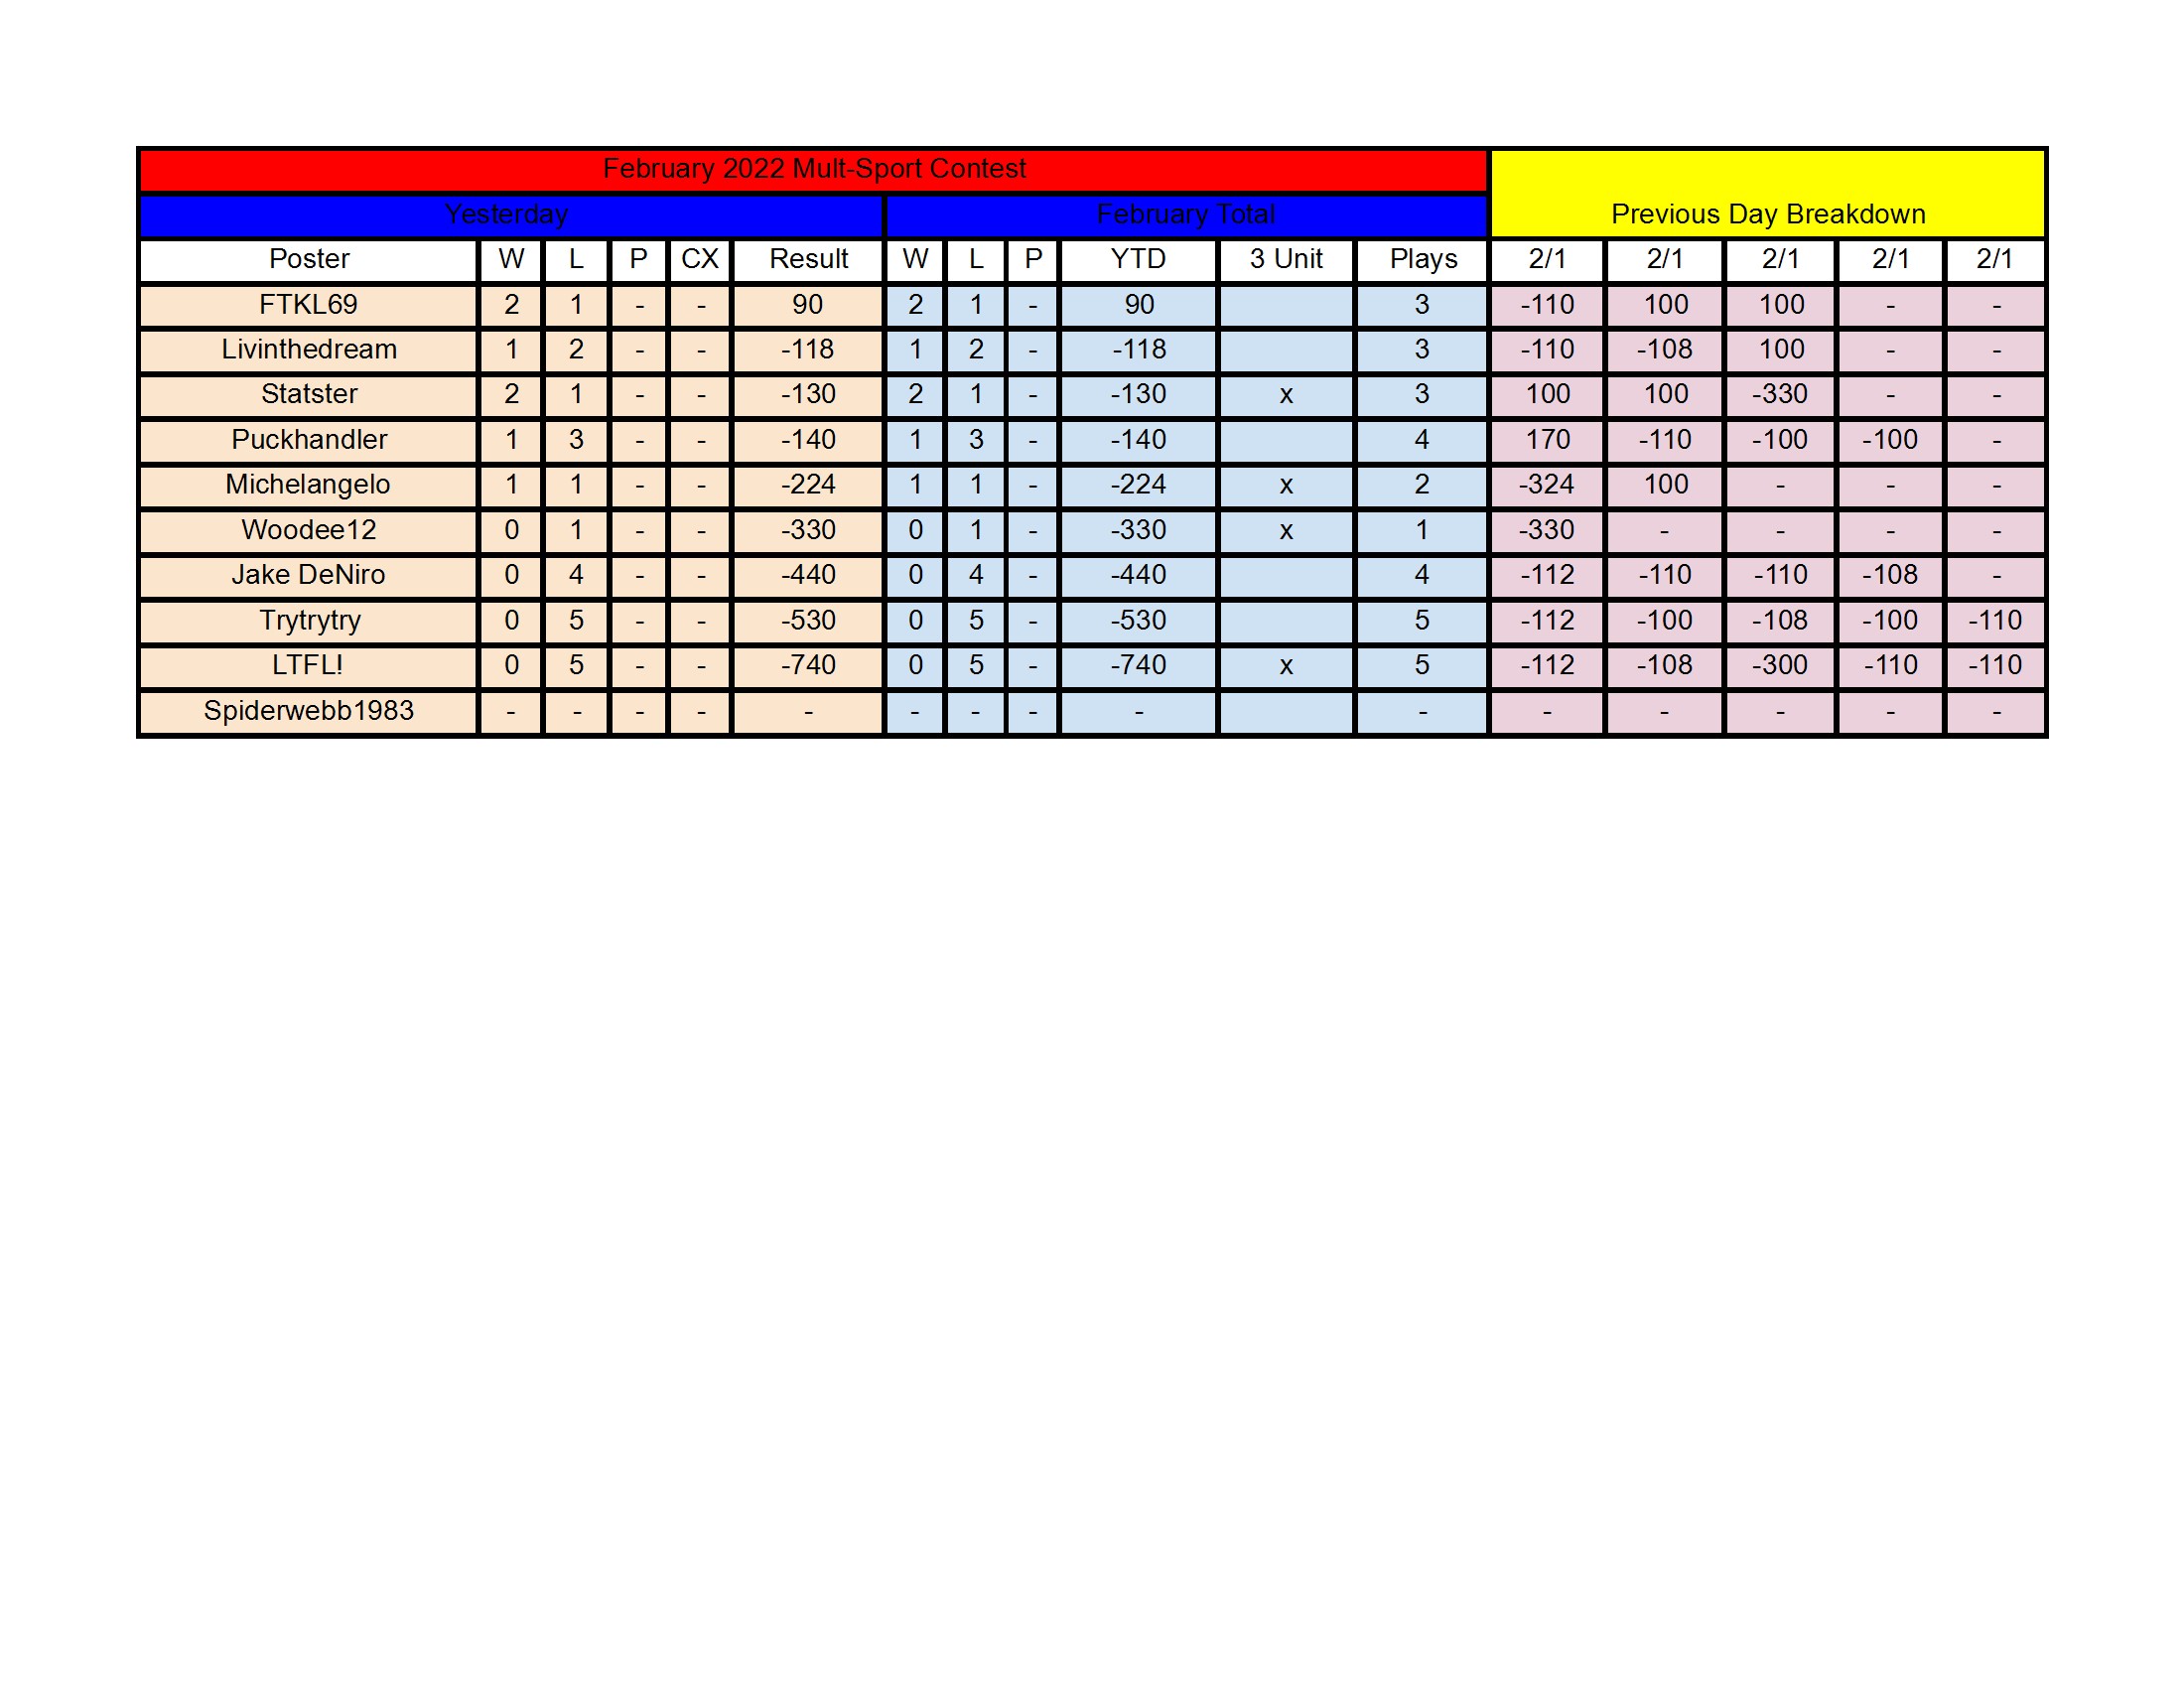 February Standings - 2_1 conv 1.jpeg